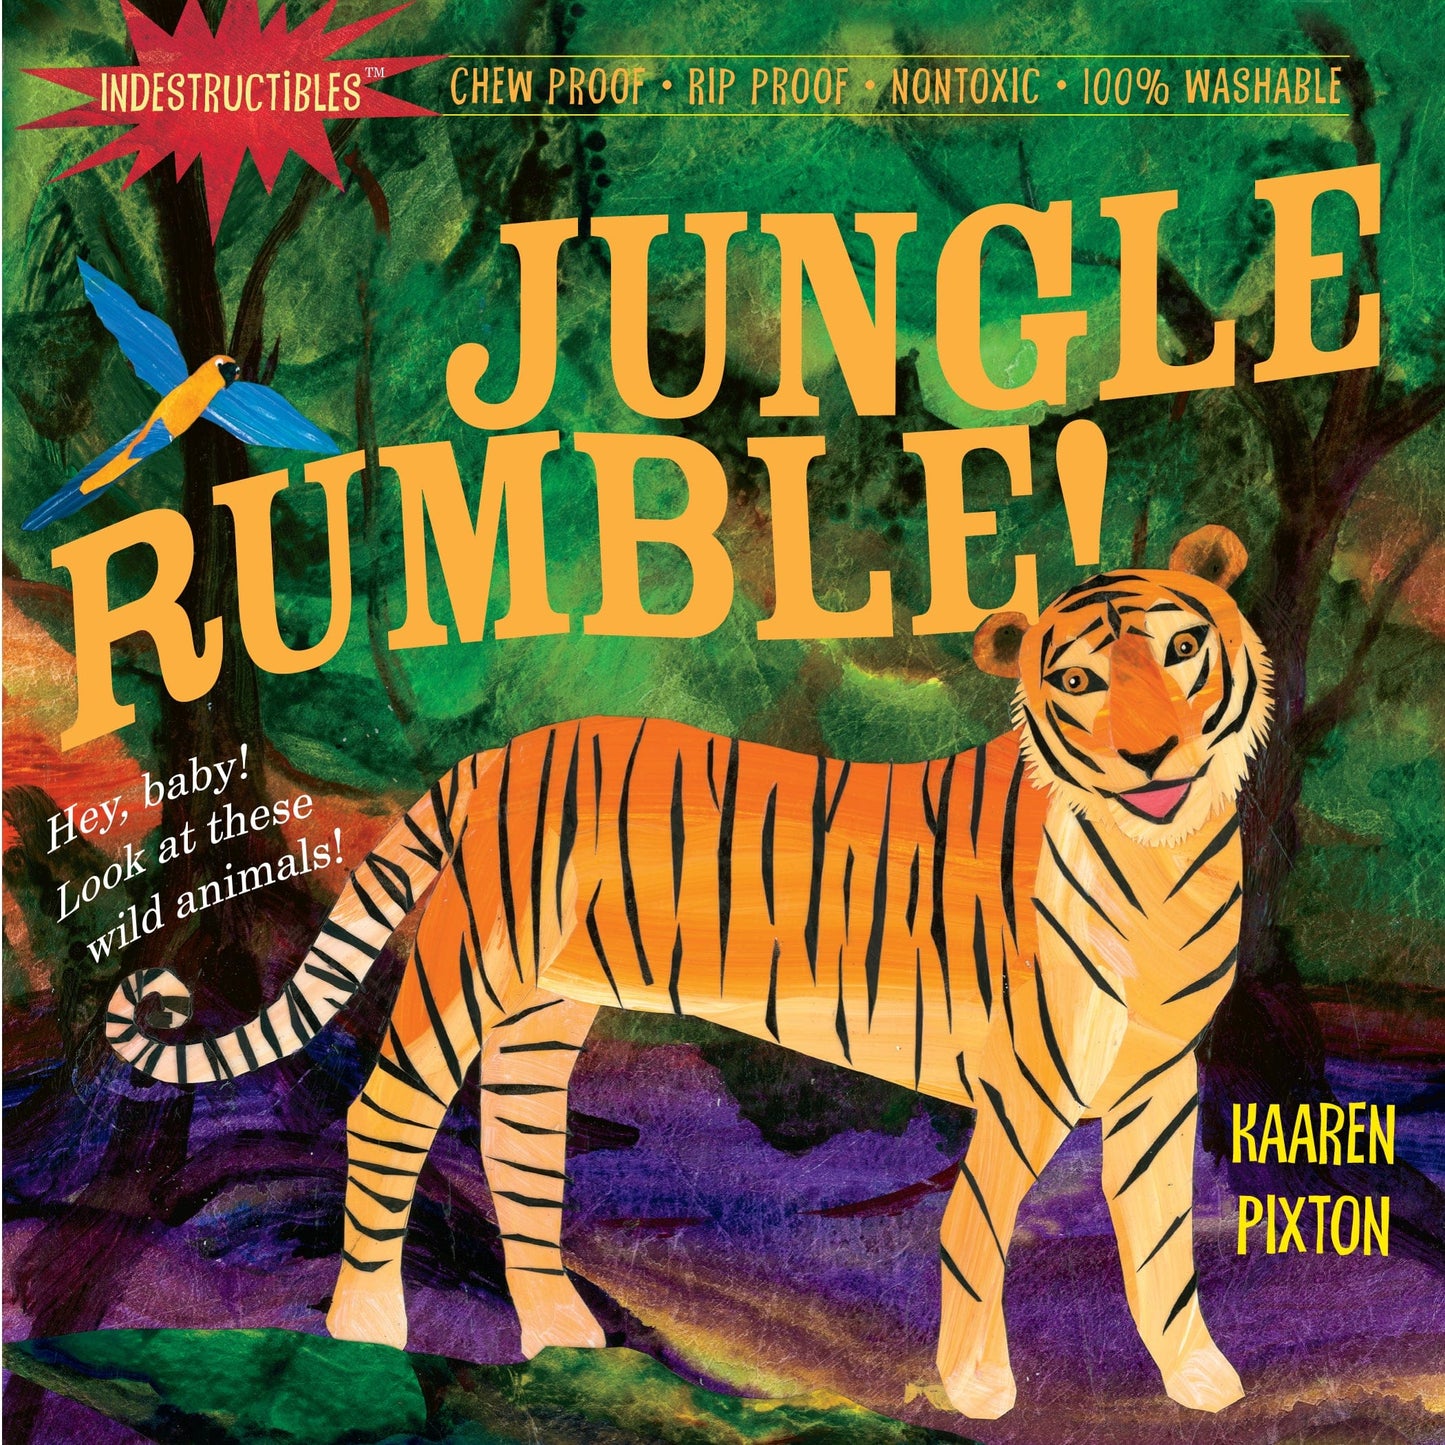 Cherry Tree Lane Toys Jungle Rumble! Indestructibles! Waterproof Books